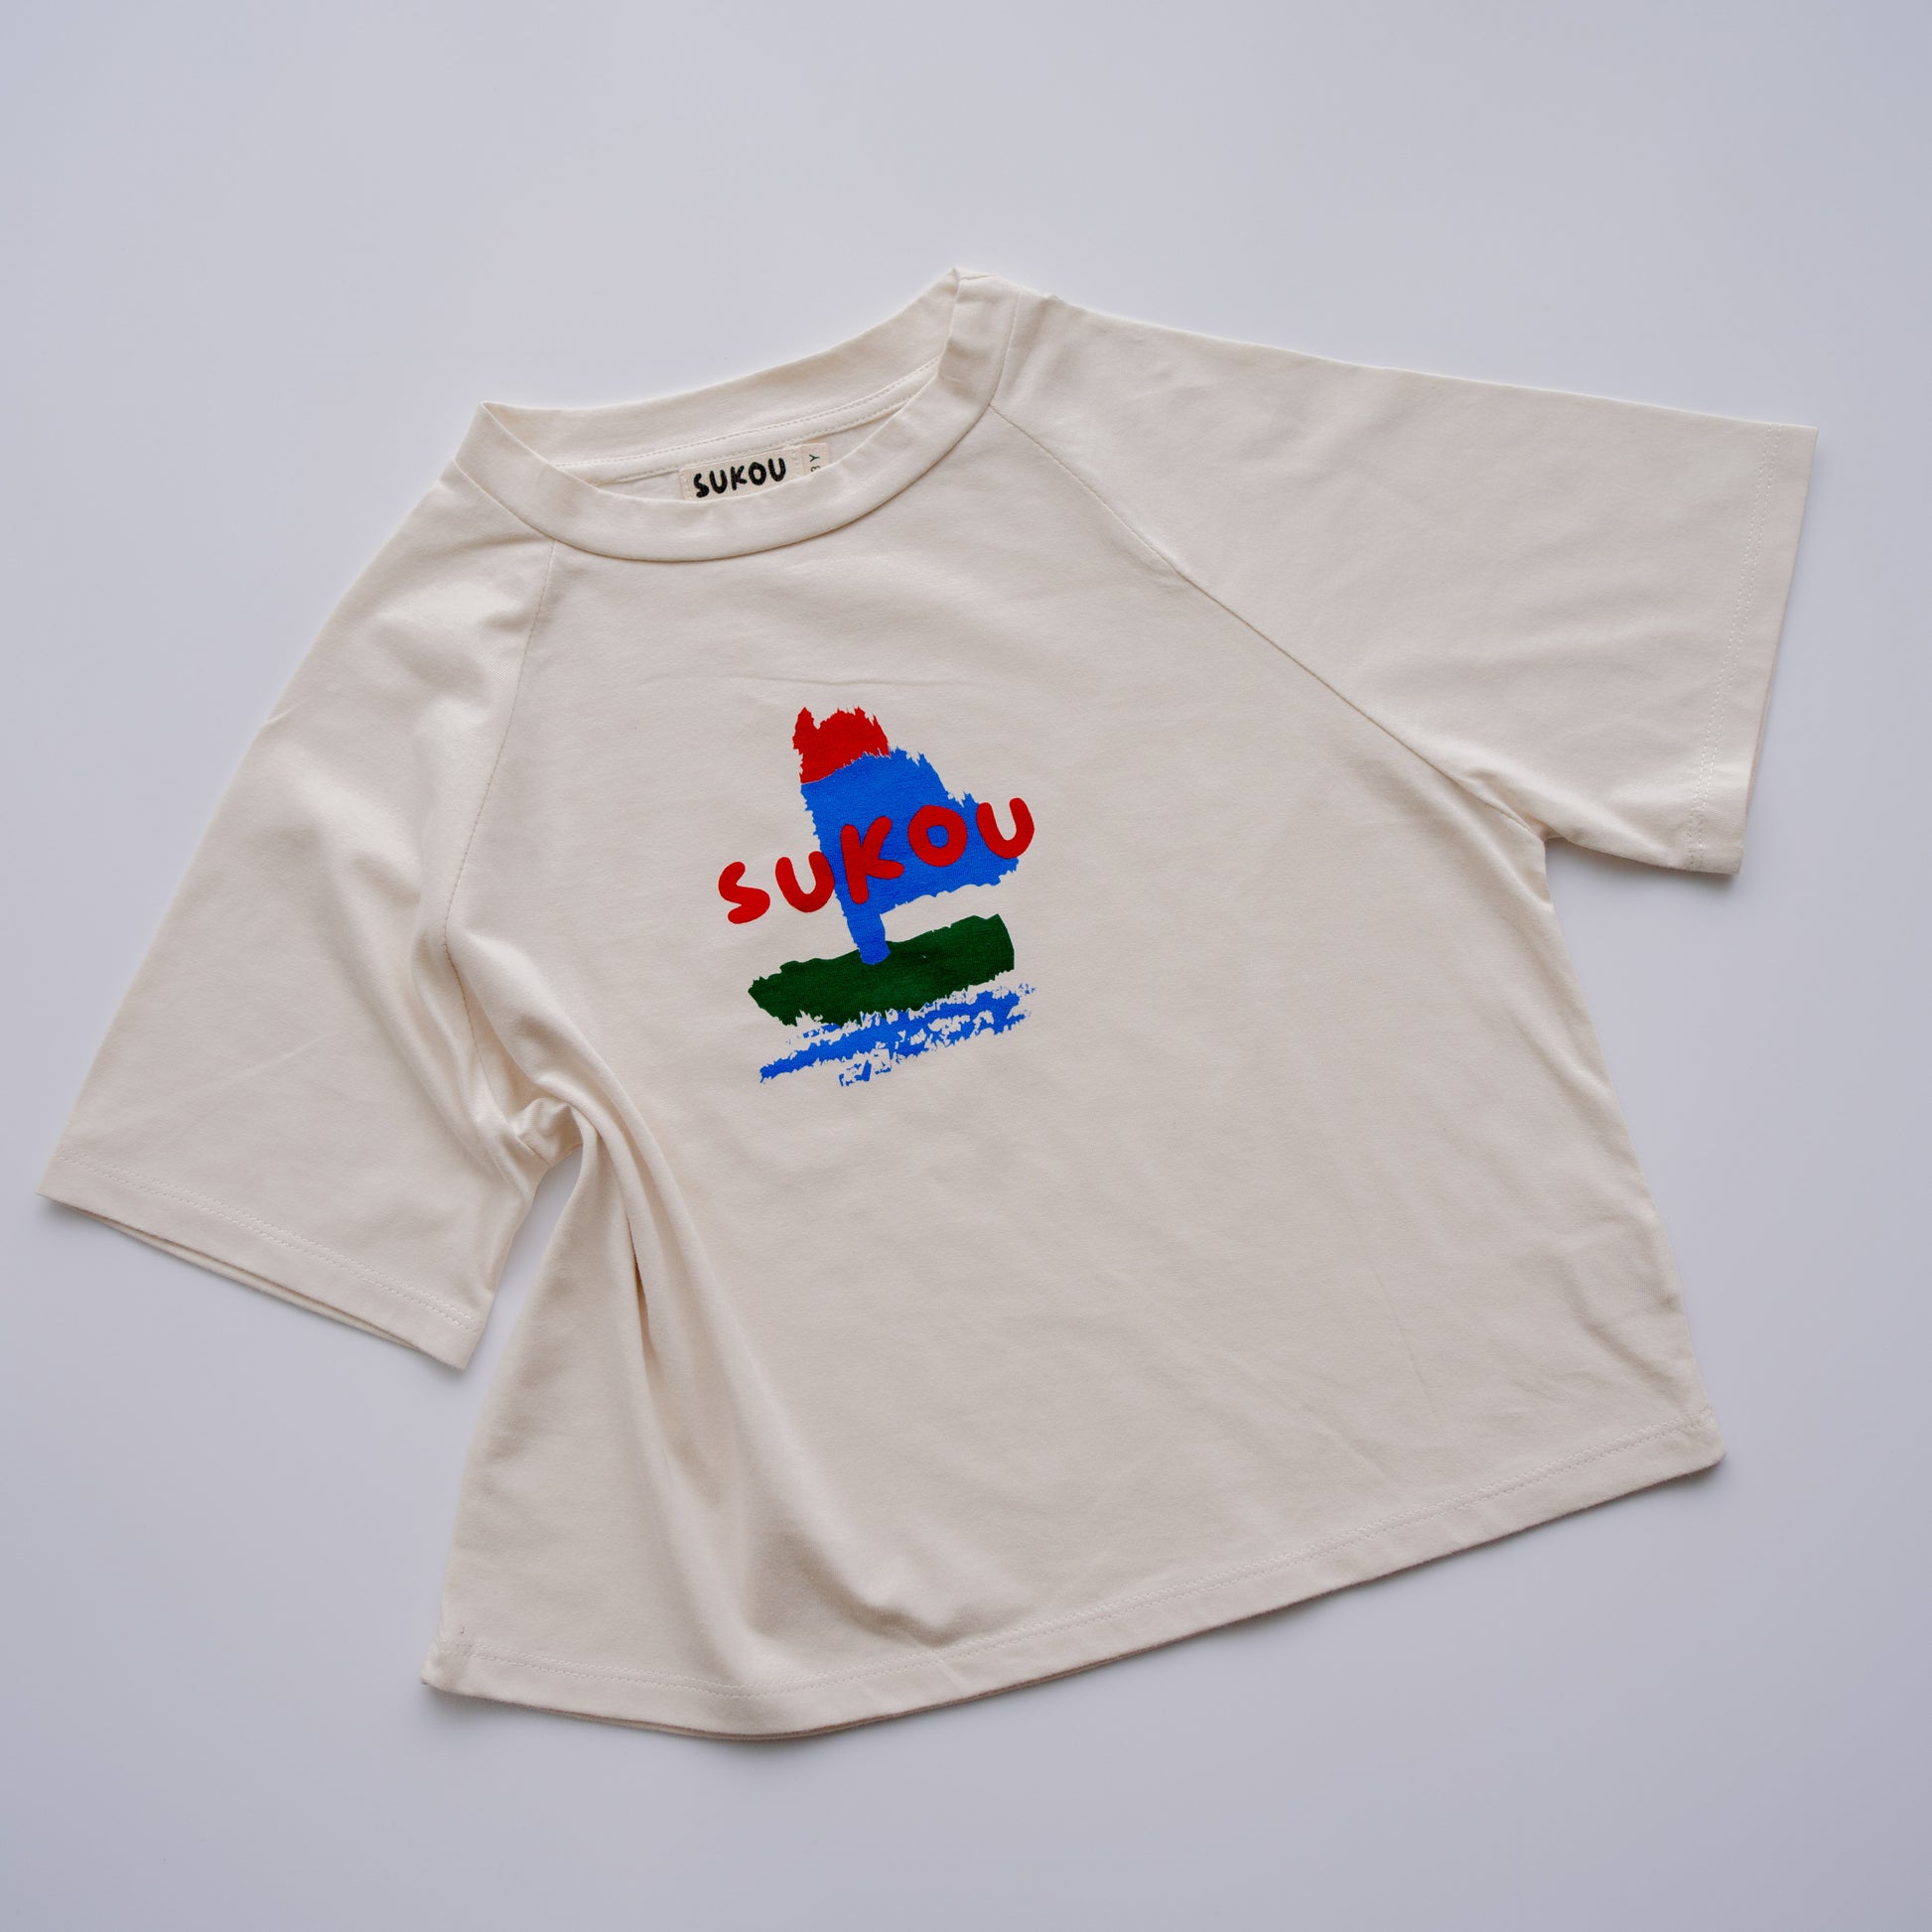 sail away sukou signature t-shirt - cream – Sukou